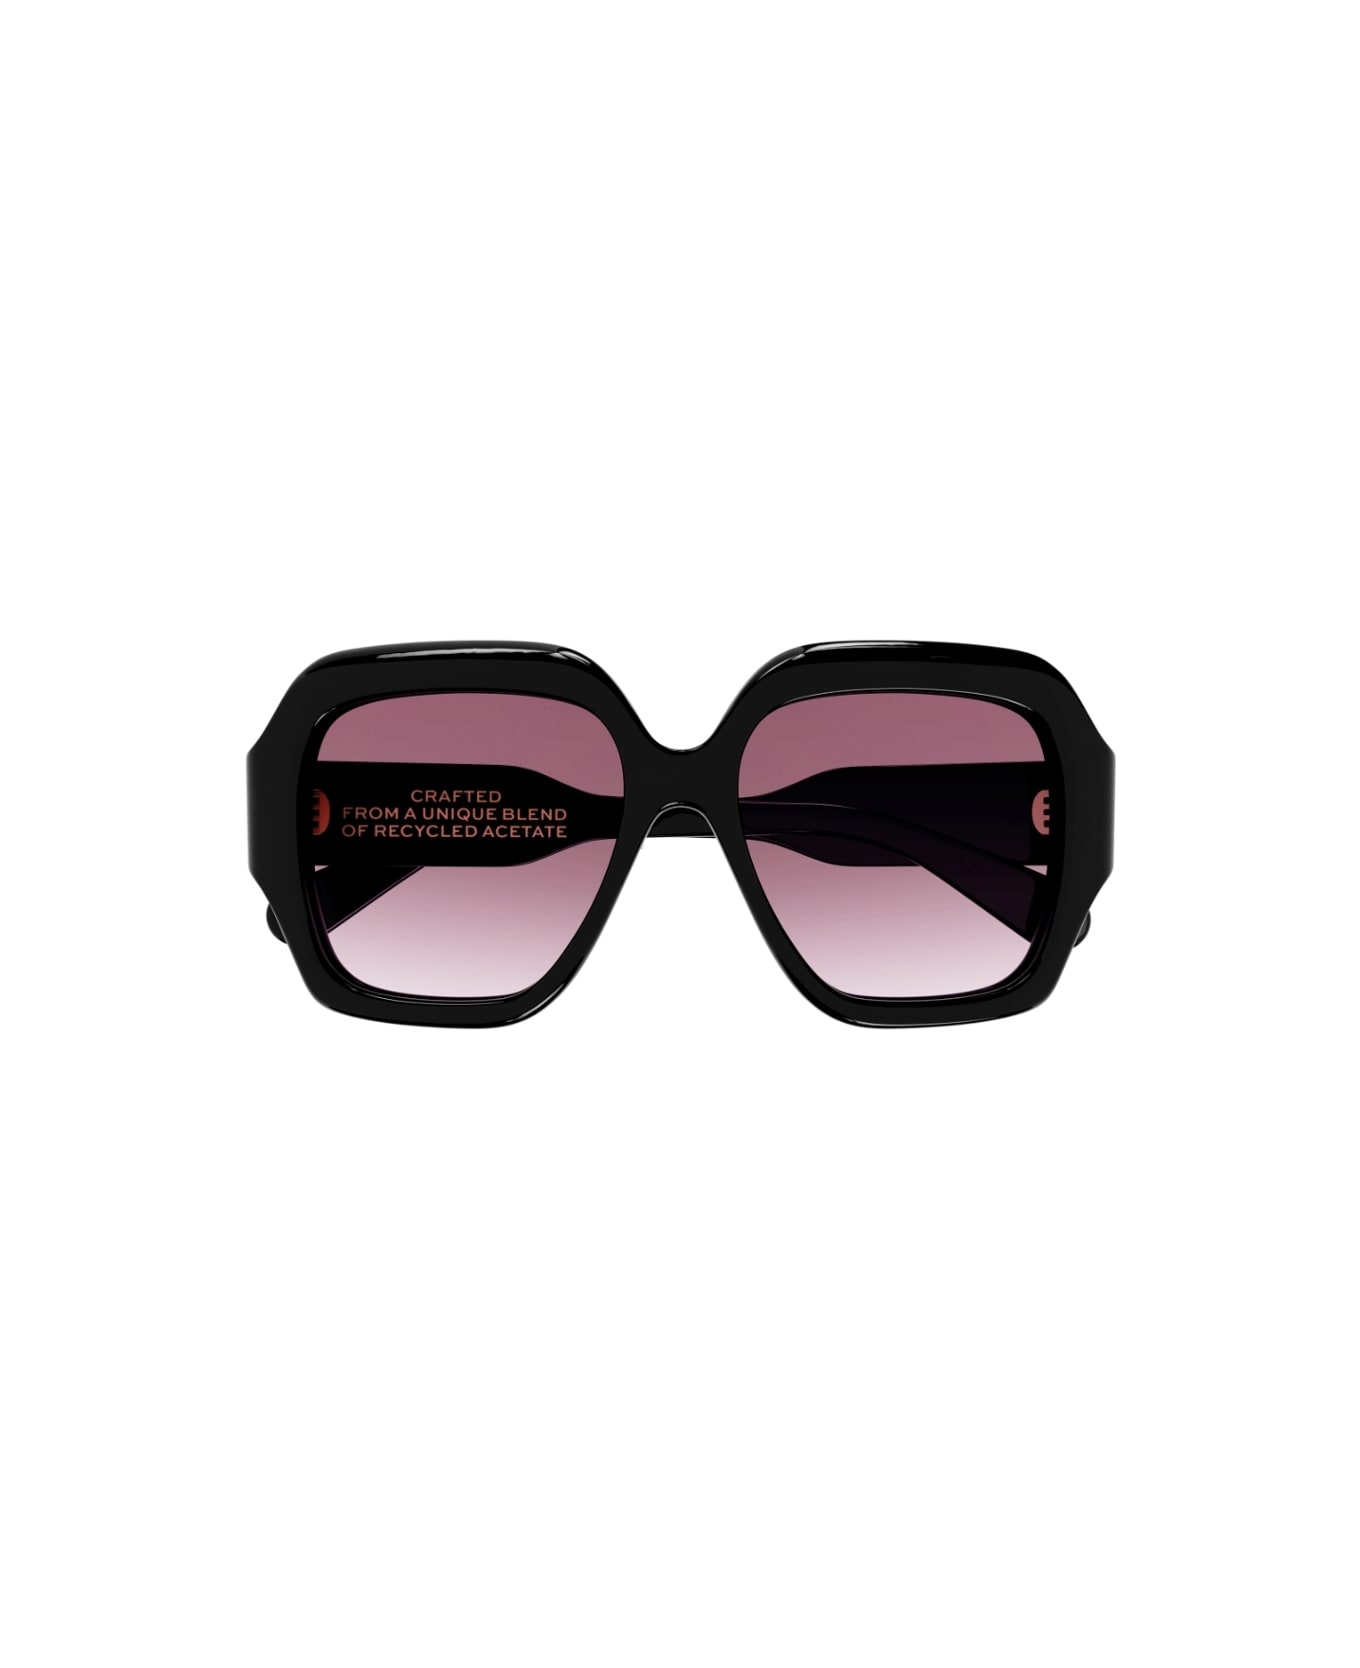 Chloé Eyewear CH0154s 001 Sunglasses サングラス